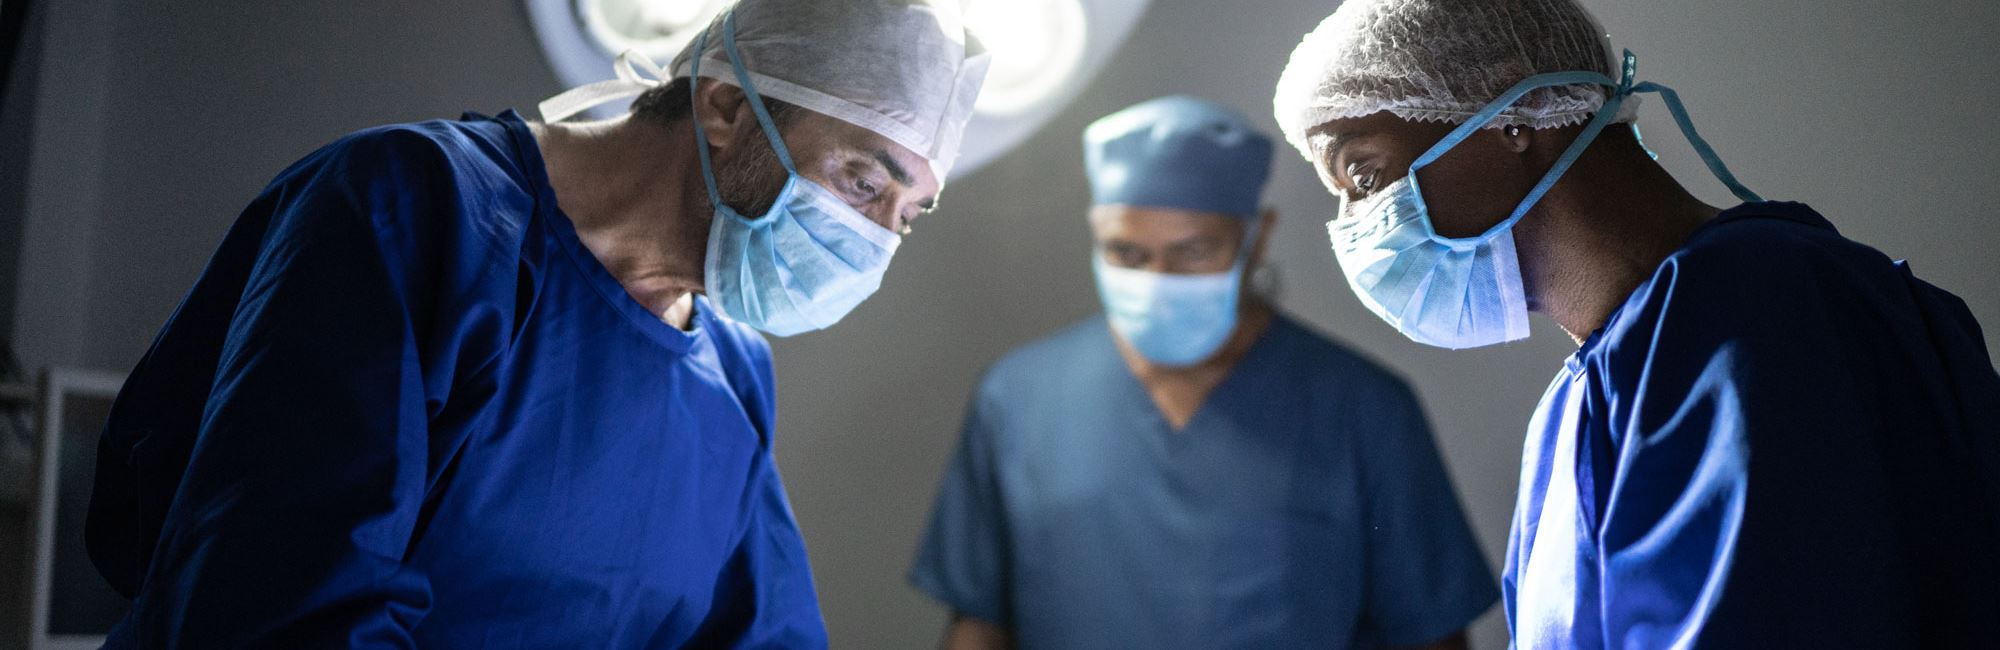 We help surgeons saving more lives